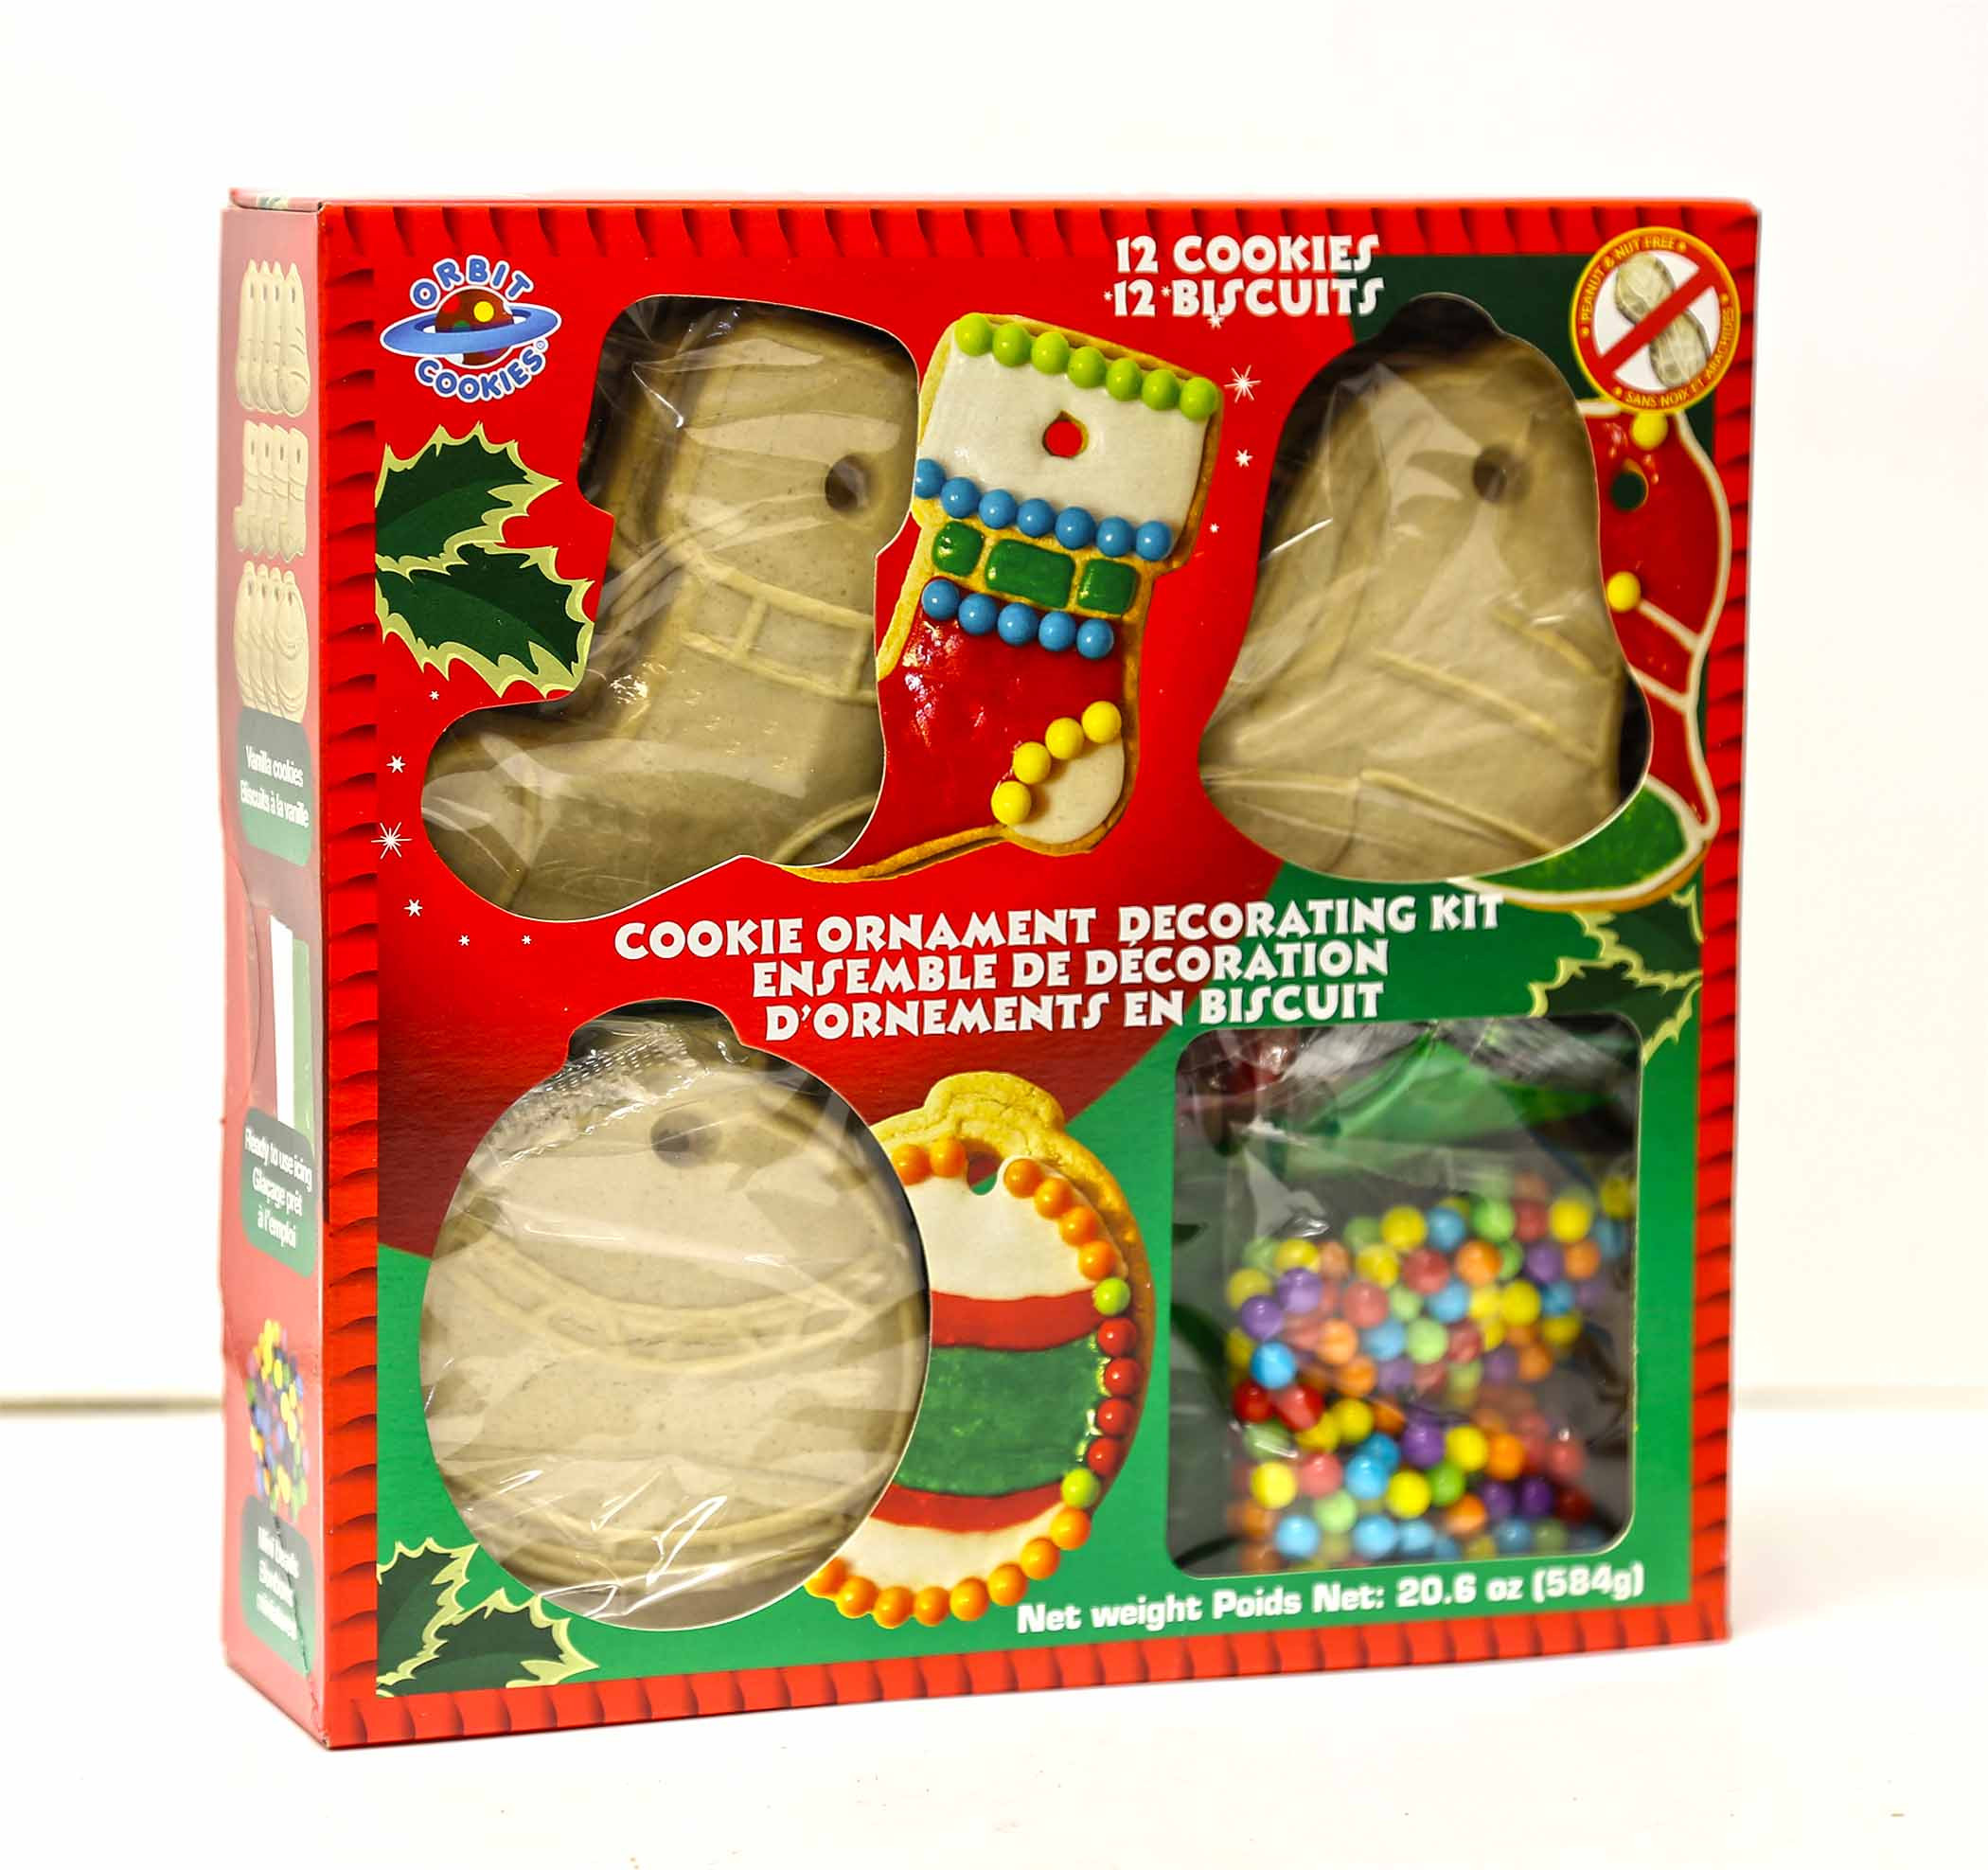 Christmas Cookies Decorating Kits
 Nafta Foods Holiday Ornament Decorating Kit Vanilla